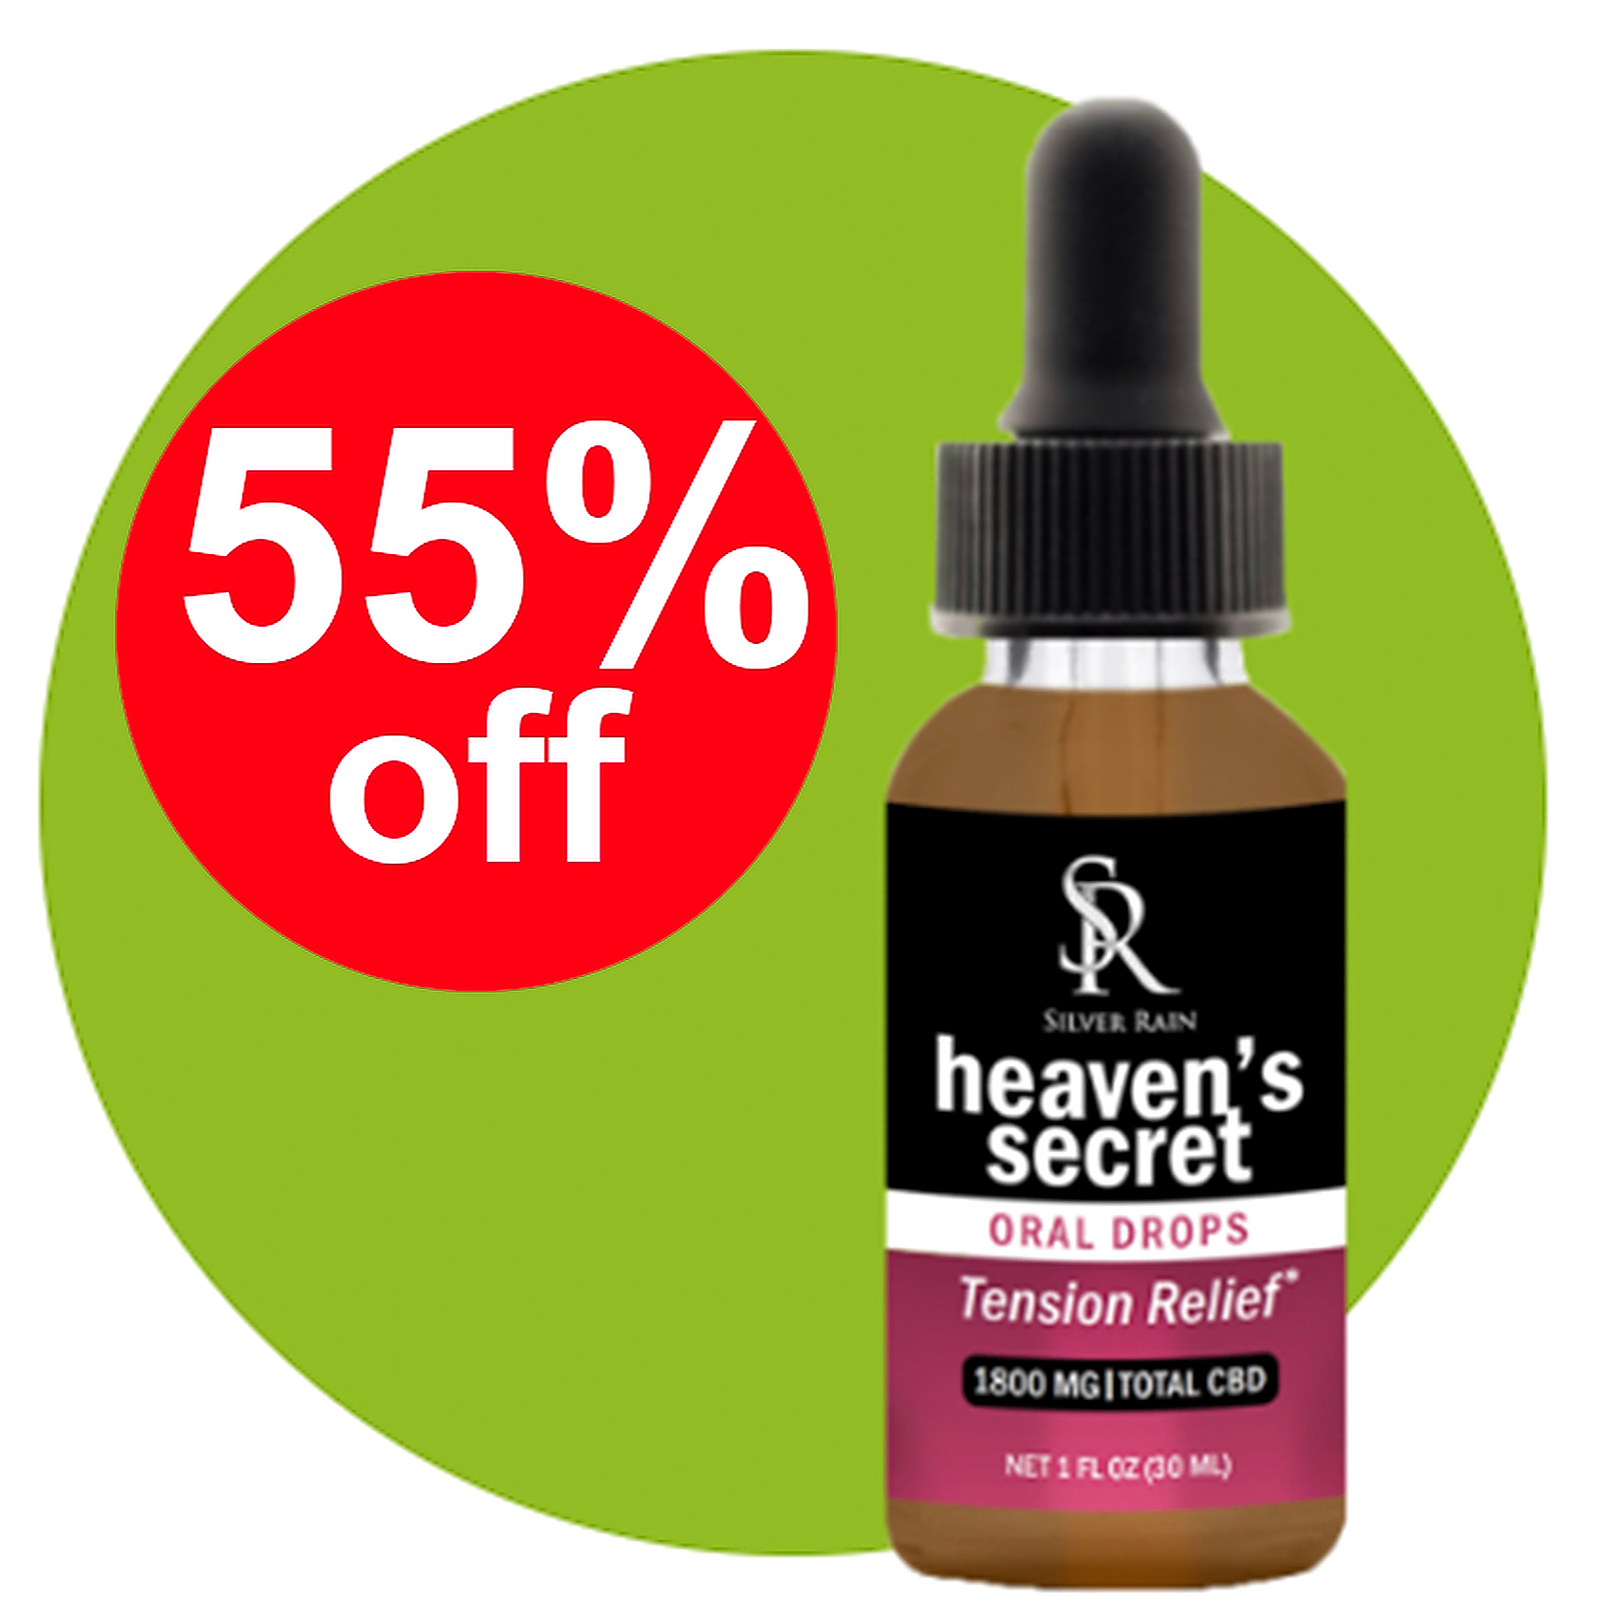 Heaven's Secret Tension Relief CBD Tincture - 55% off March special